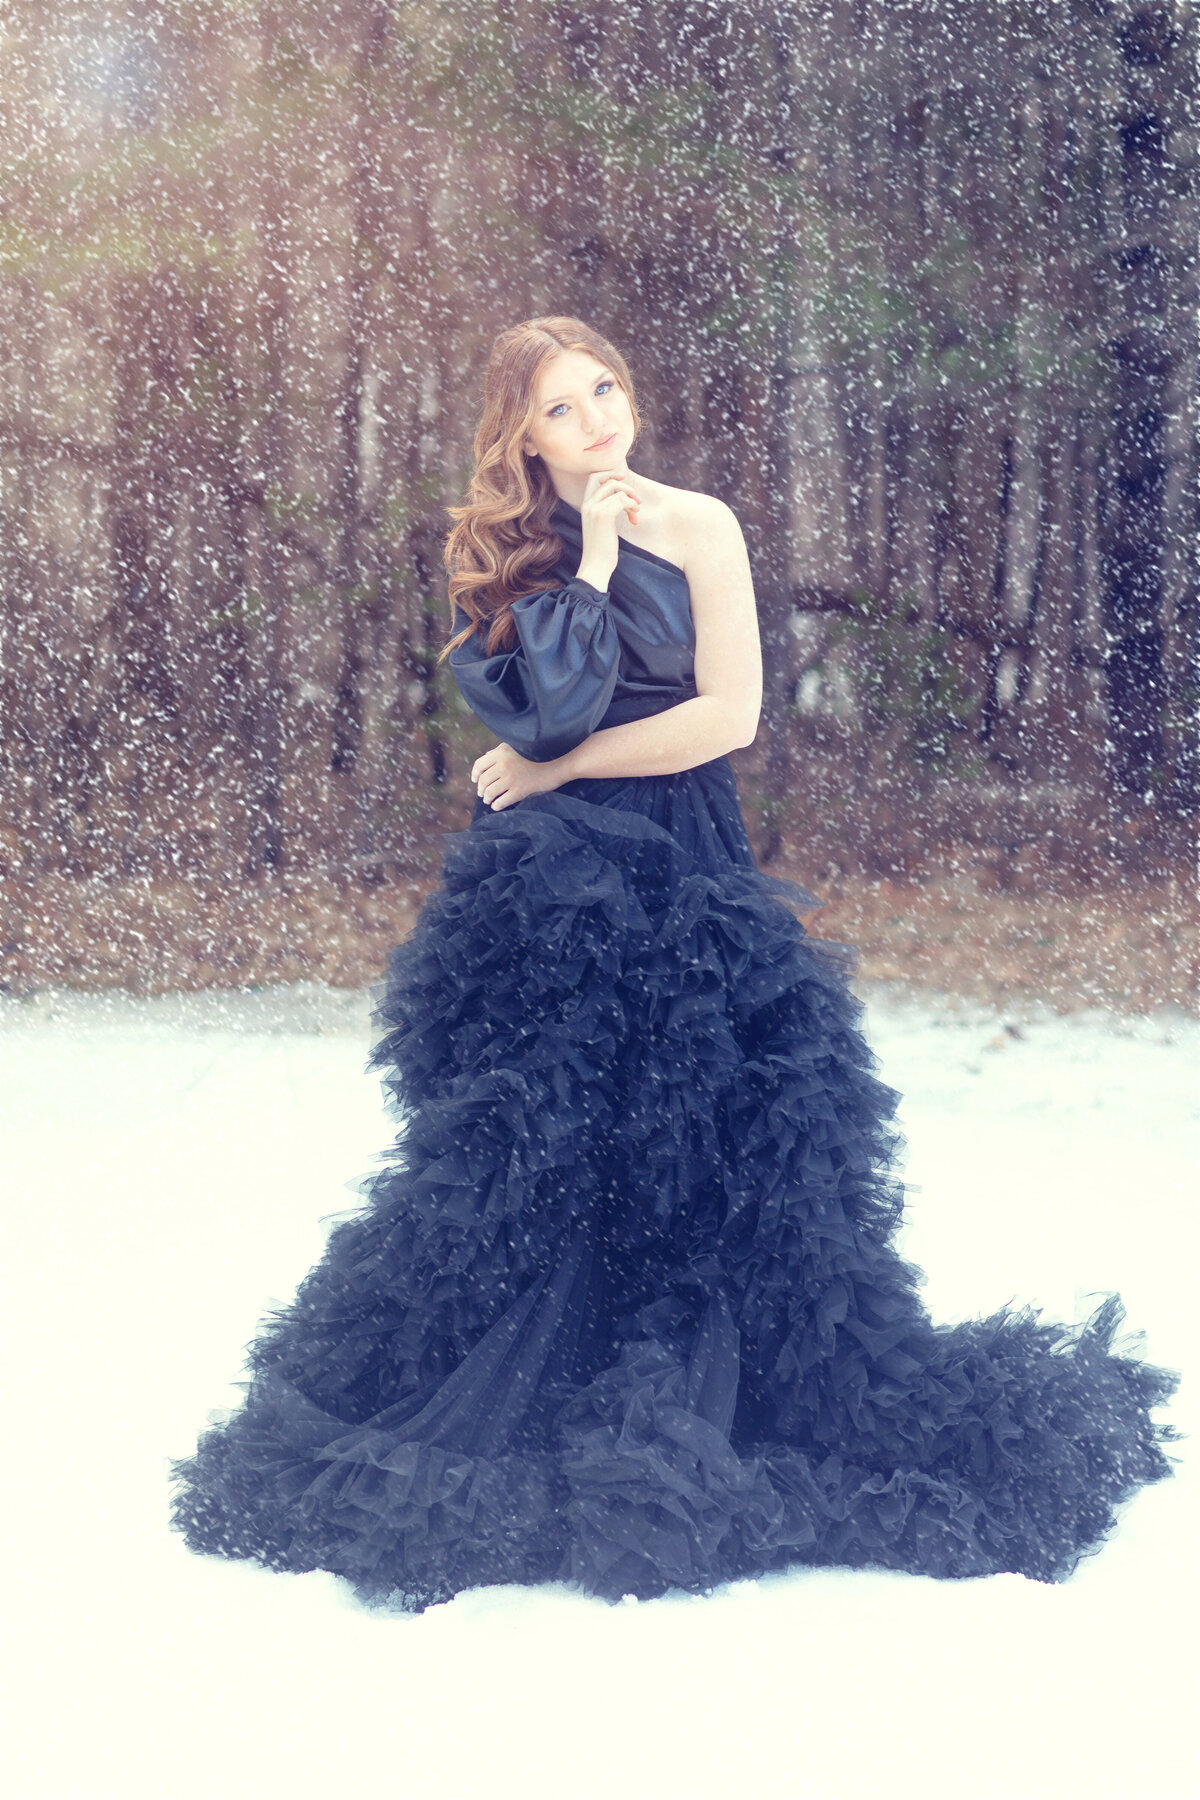 high school senior girl portrait outdoors in winter snow - Kristen Zannella Photography